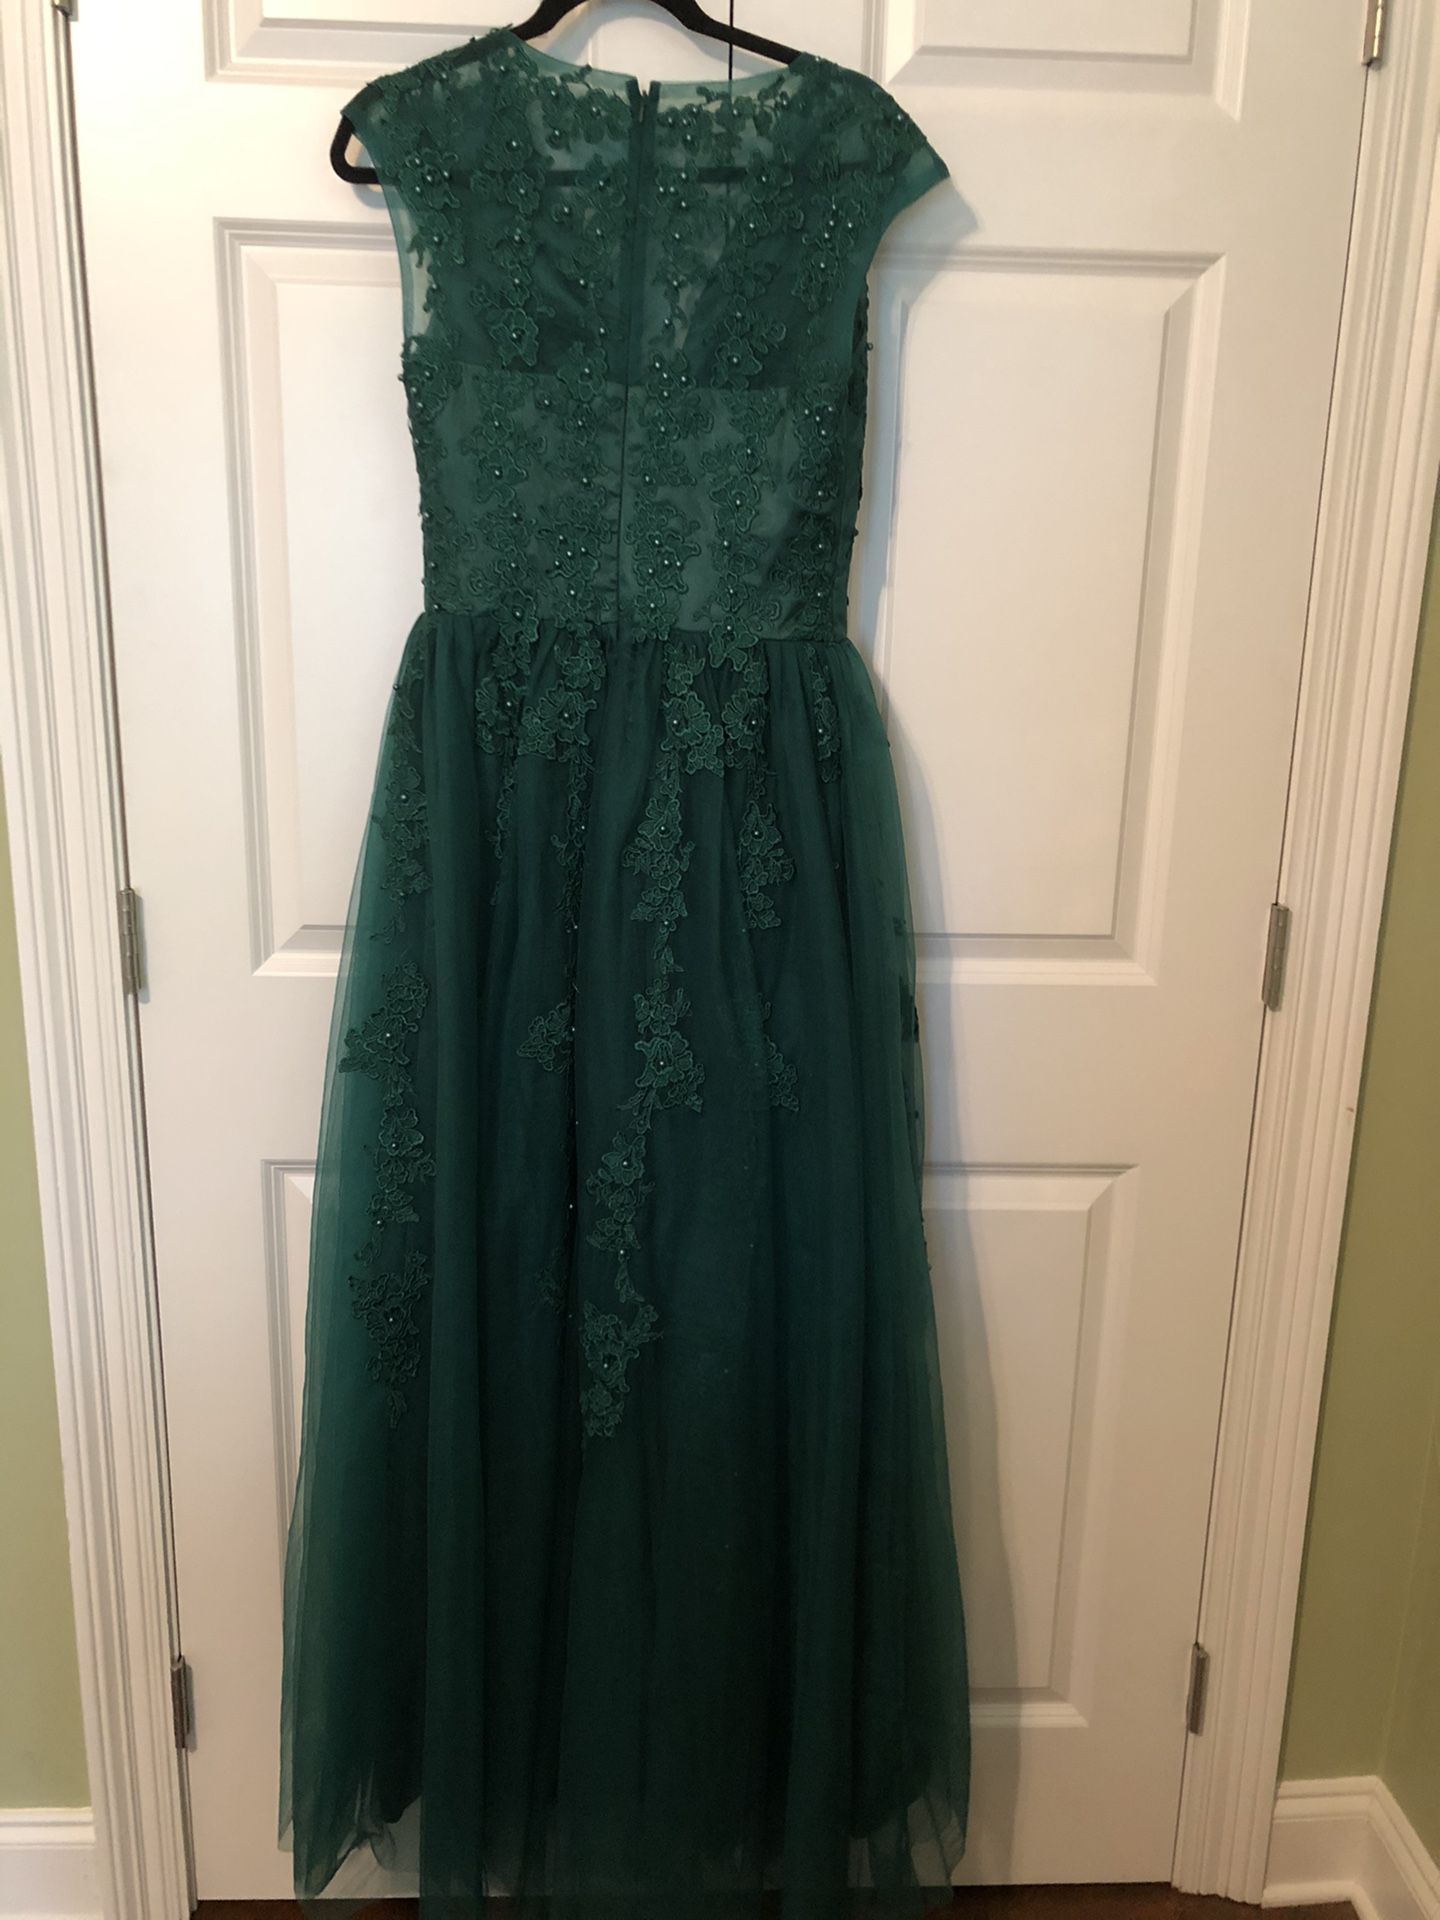 Hunter Green Bridesmaid Dress For Sale